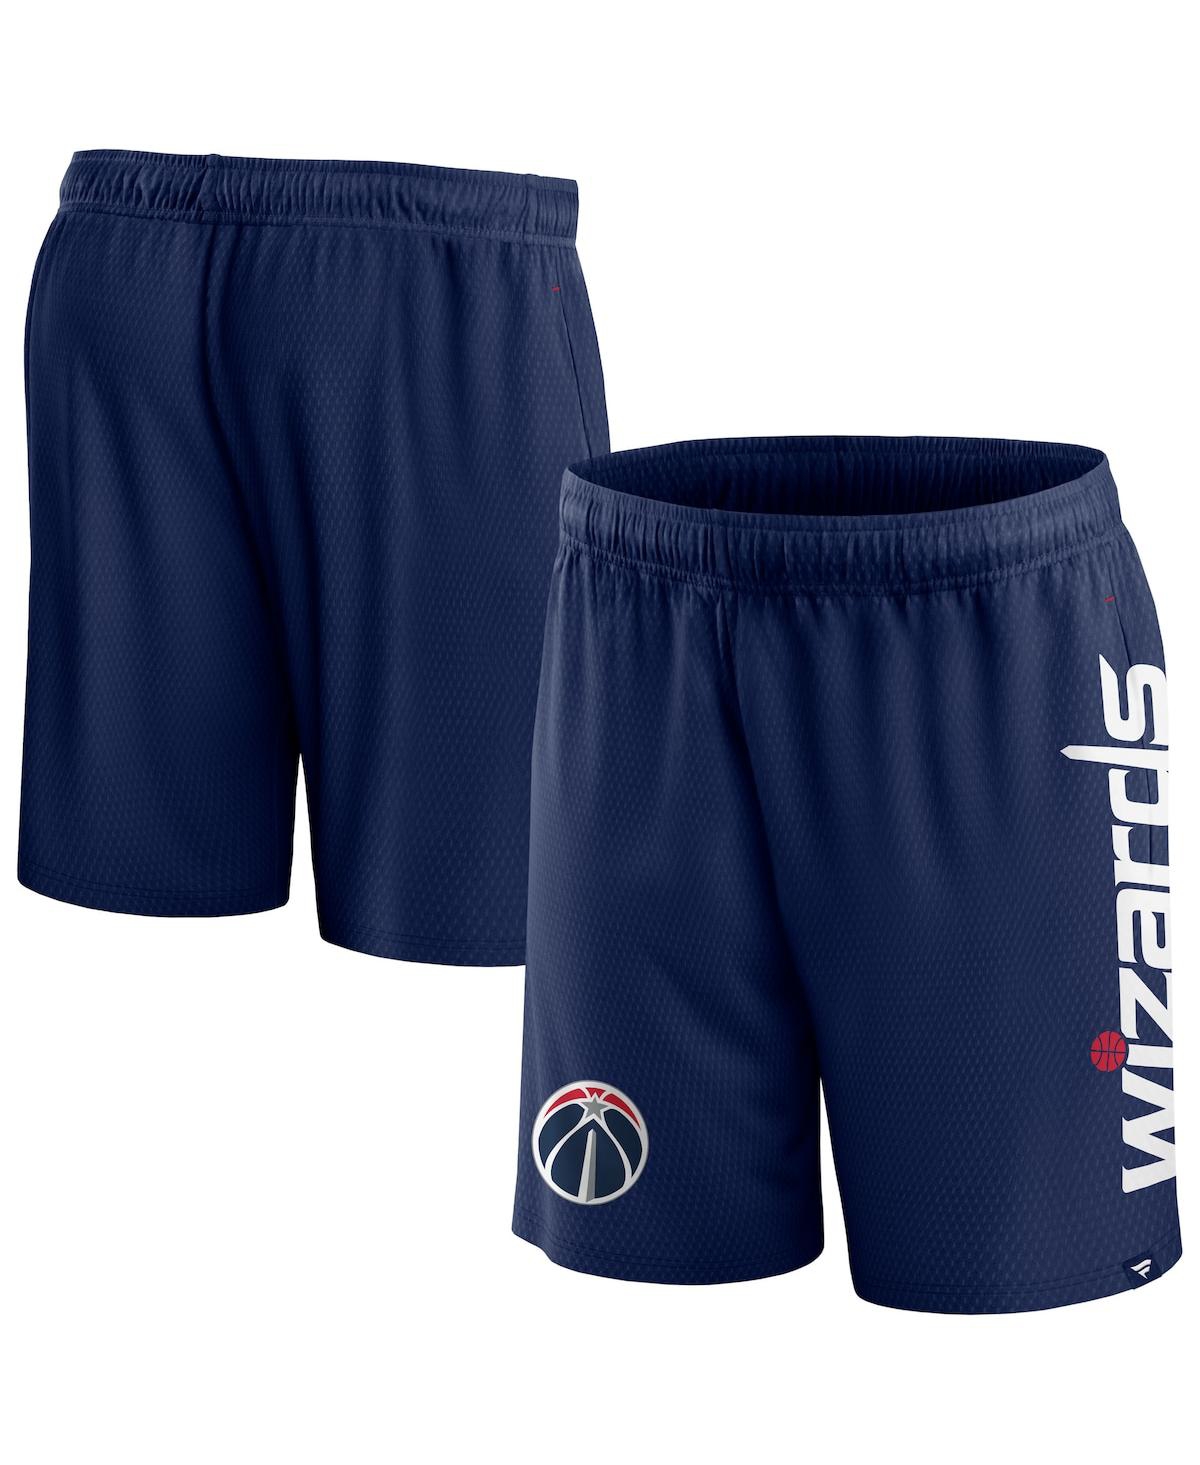 Fanatics Men's Navy Washington Wizards Post Up Mesh Shorts In Blue